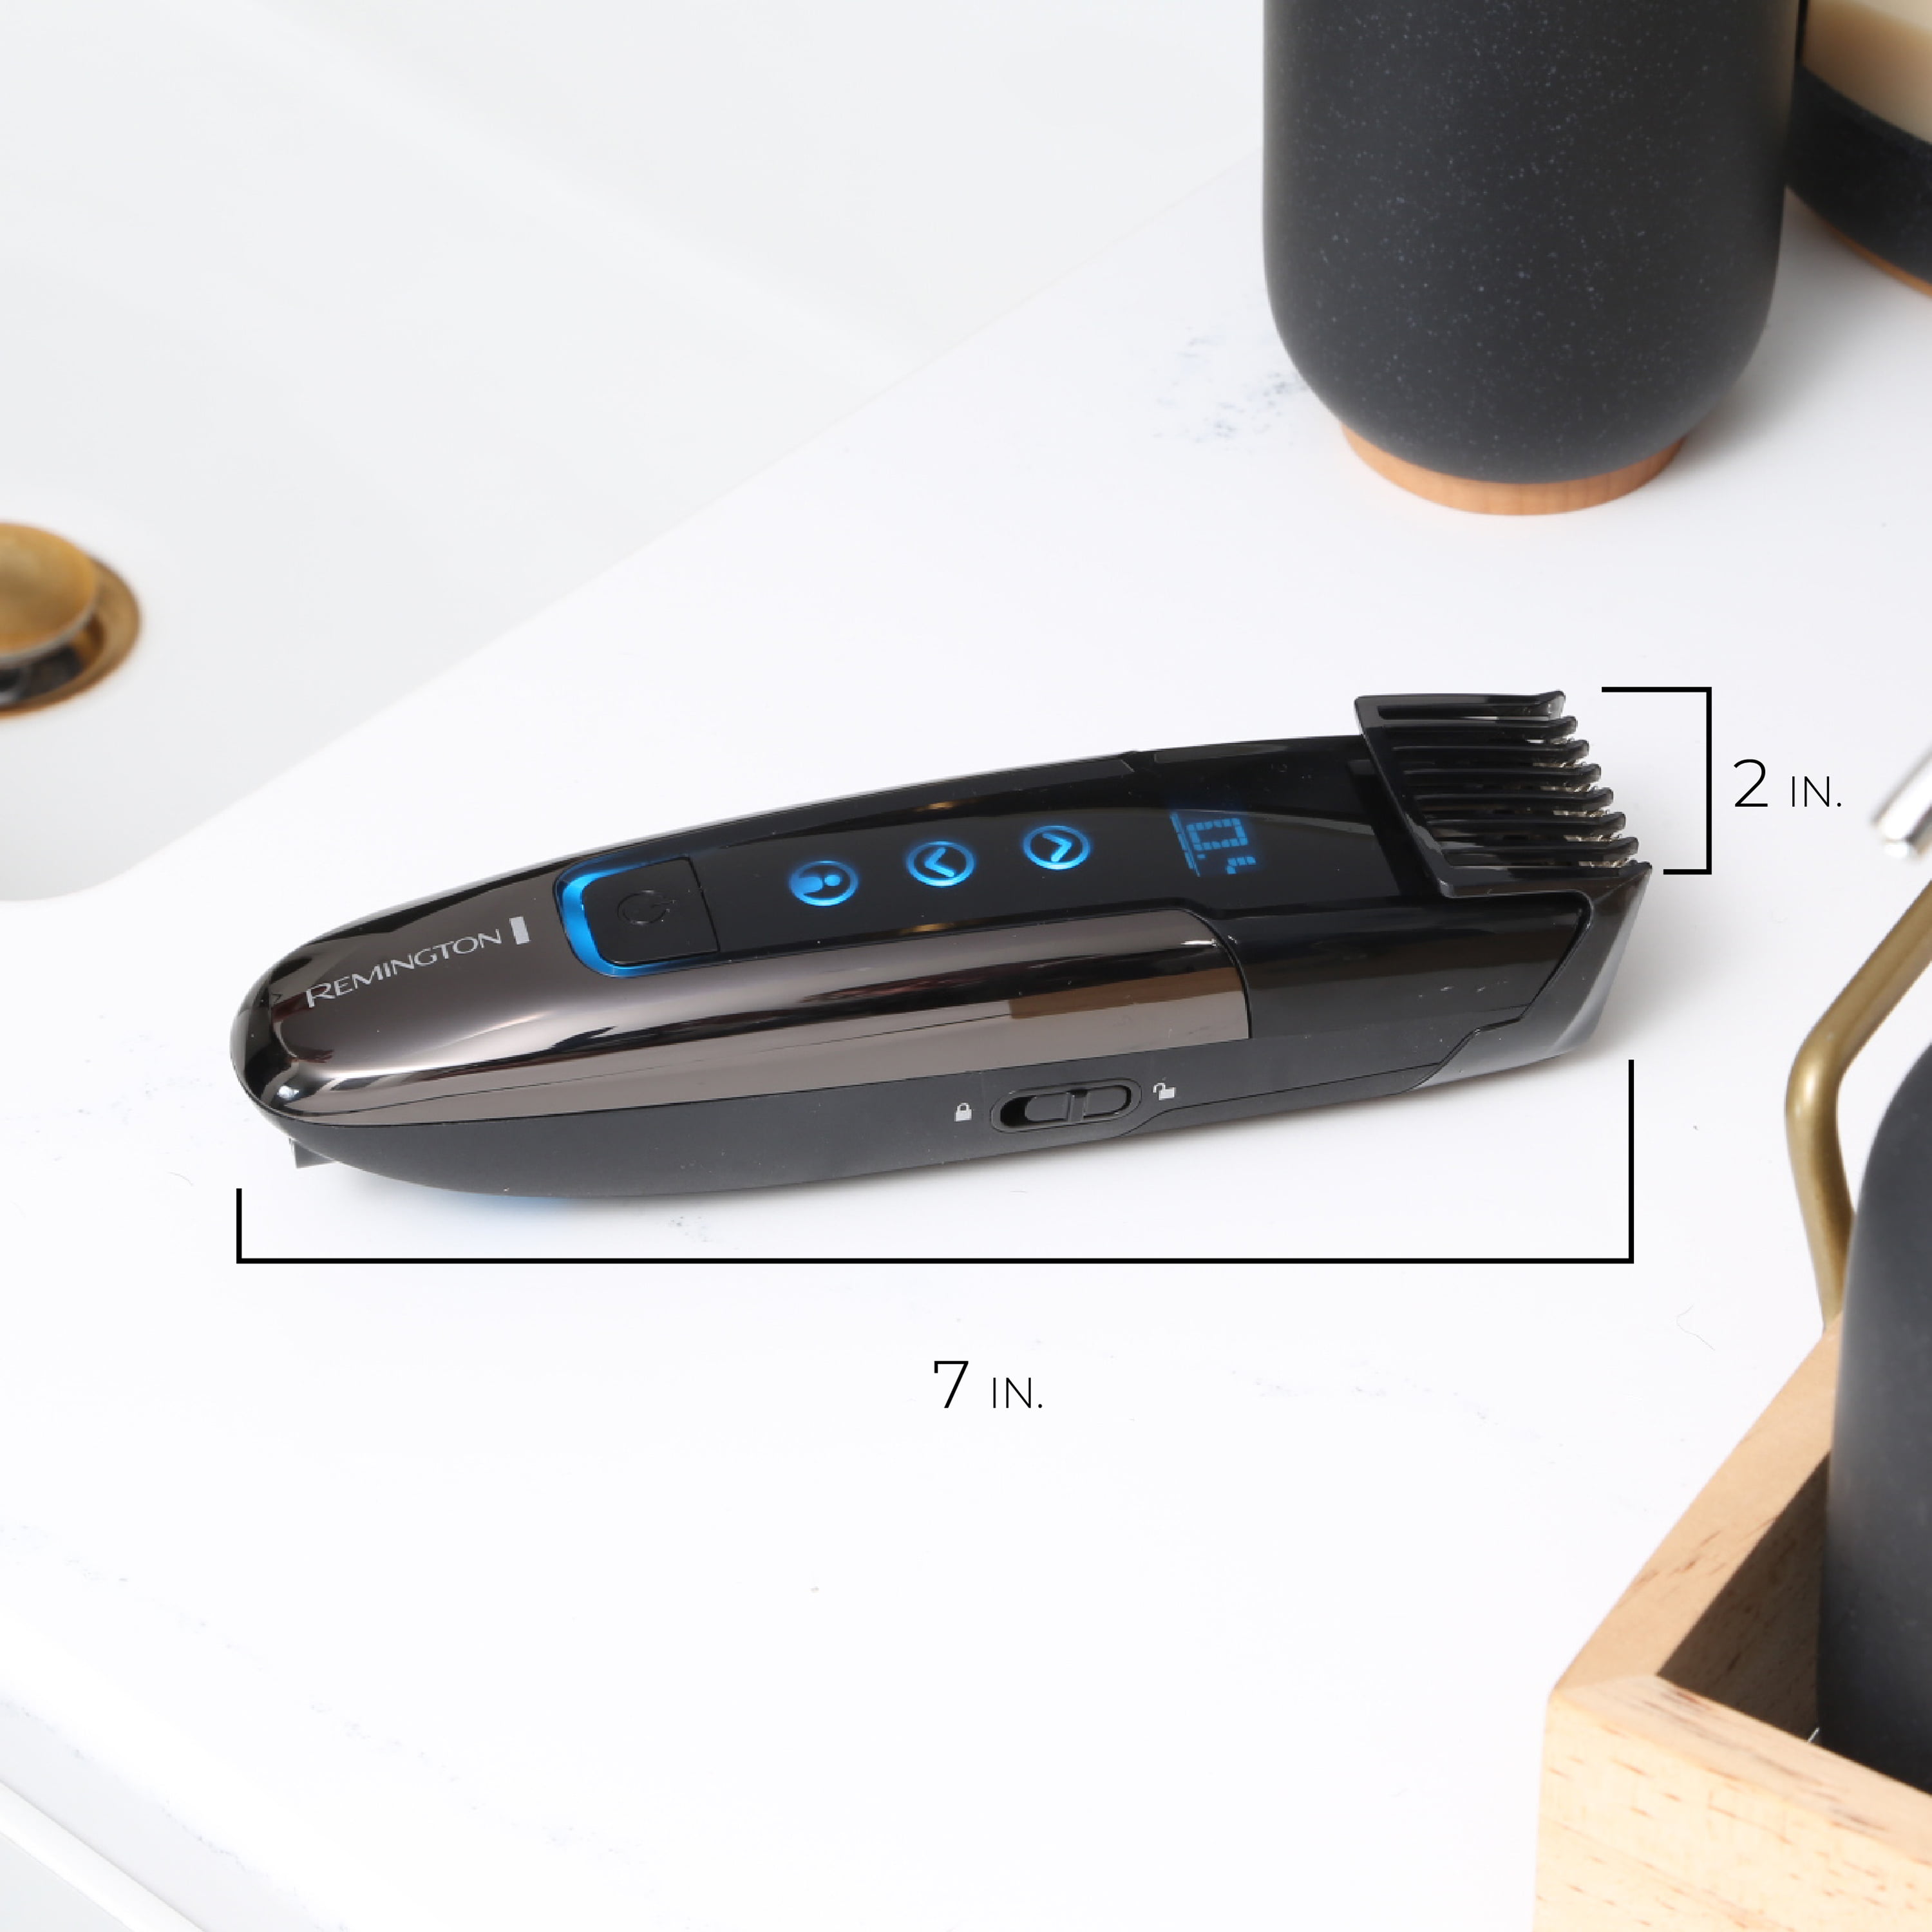 remington mb4700 smart beard trimmer